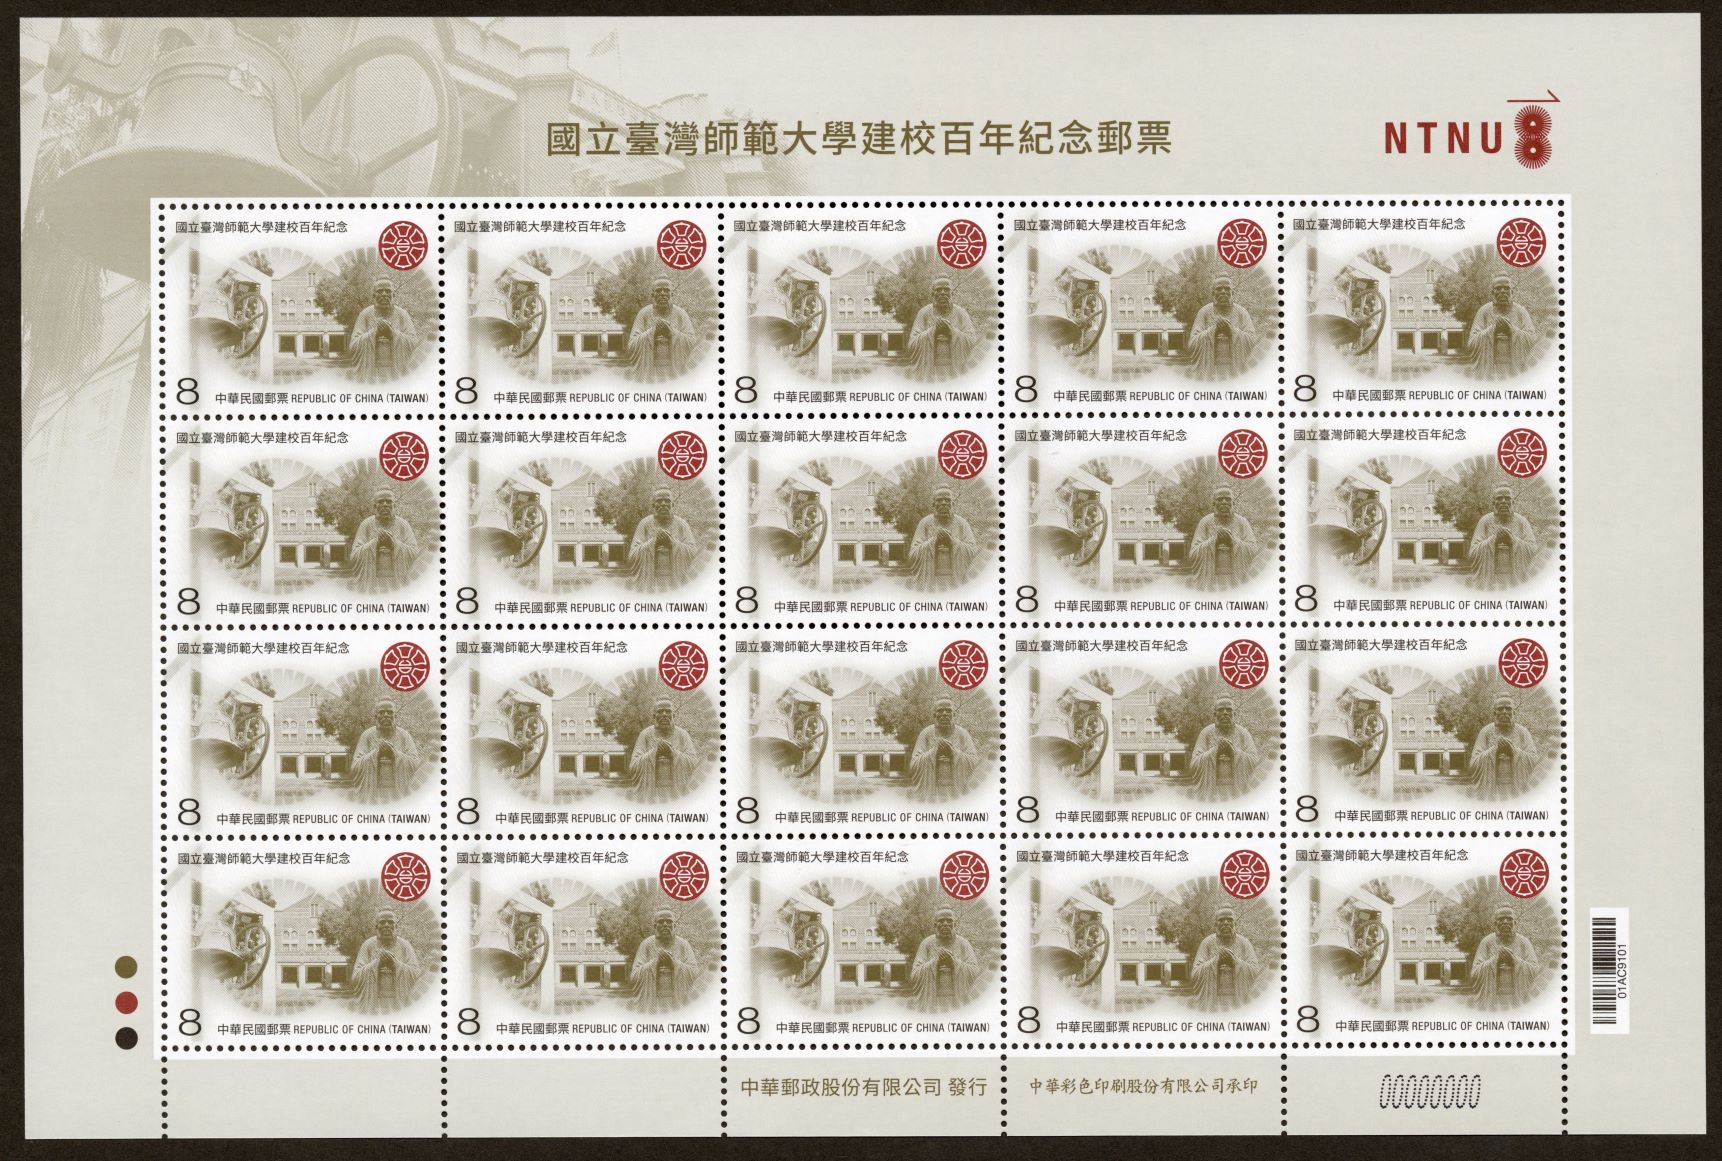 (Com.345.10)Com.345 National Taiwan Normal University 100th Anniversary Commemorative Issue